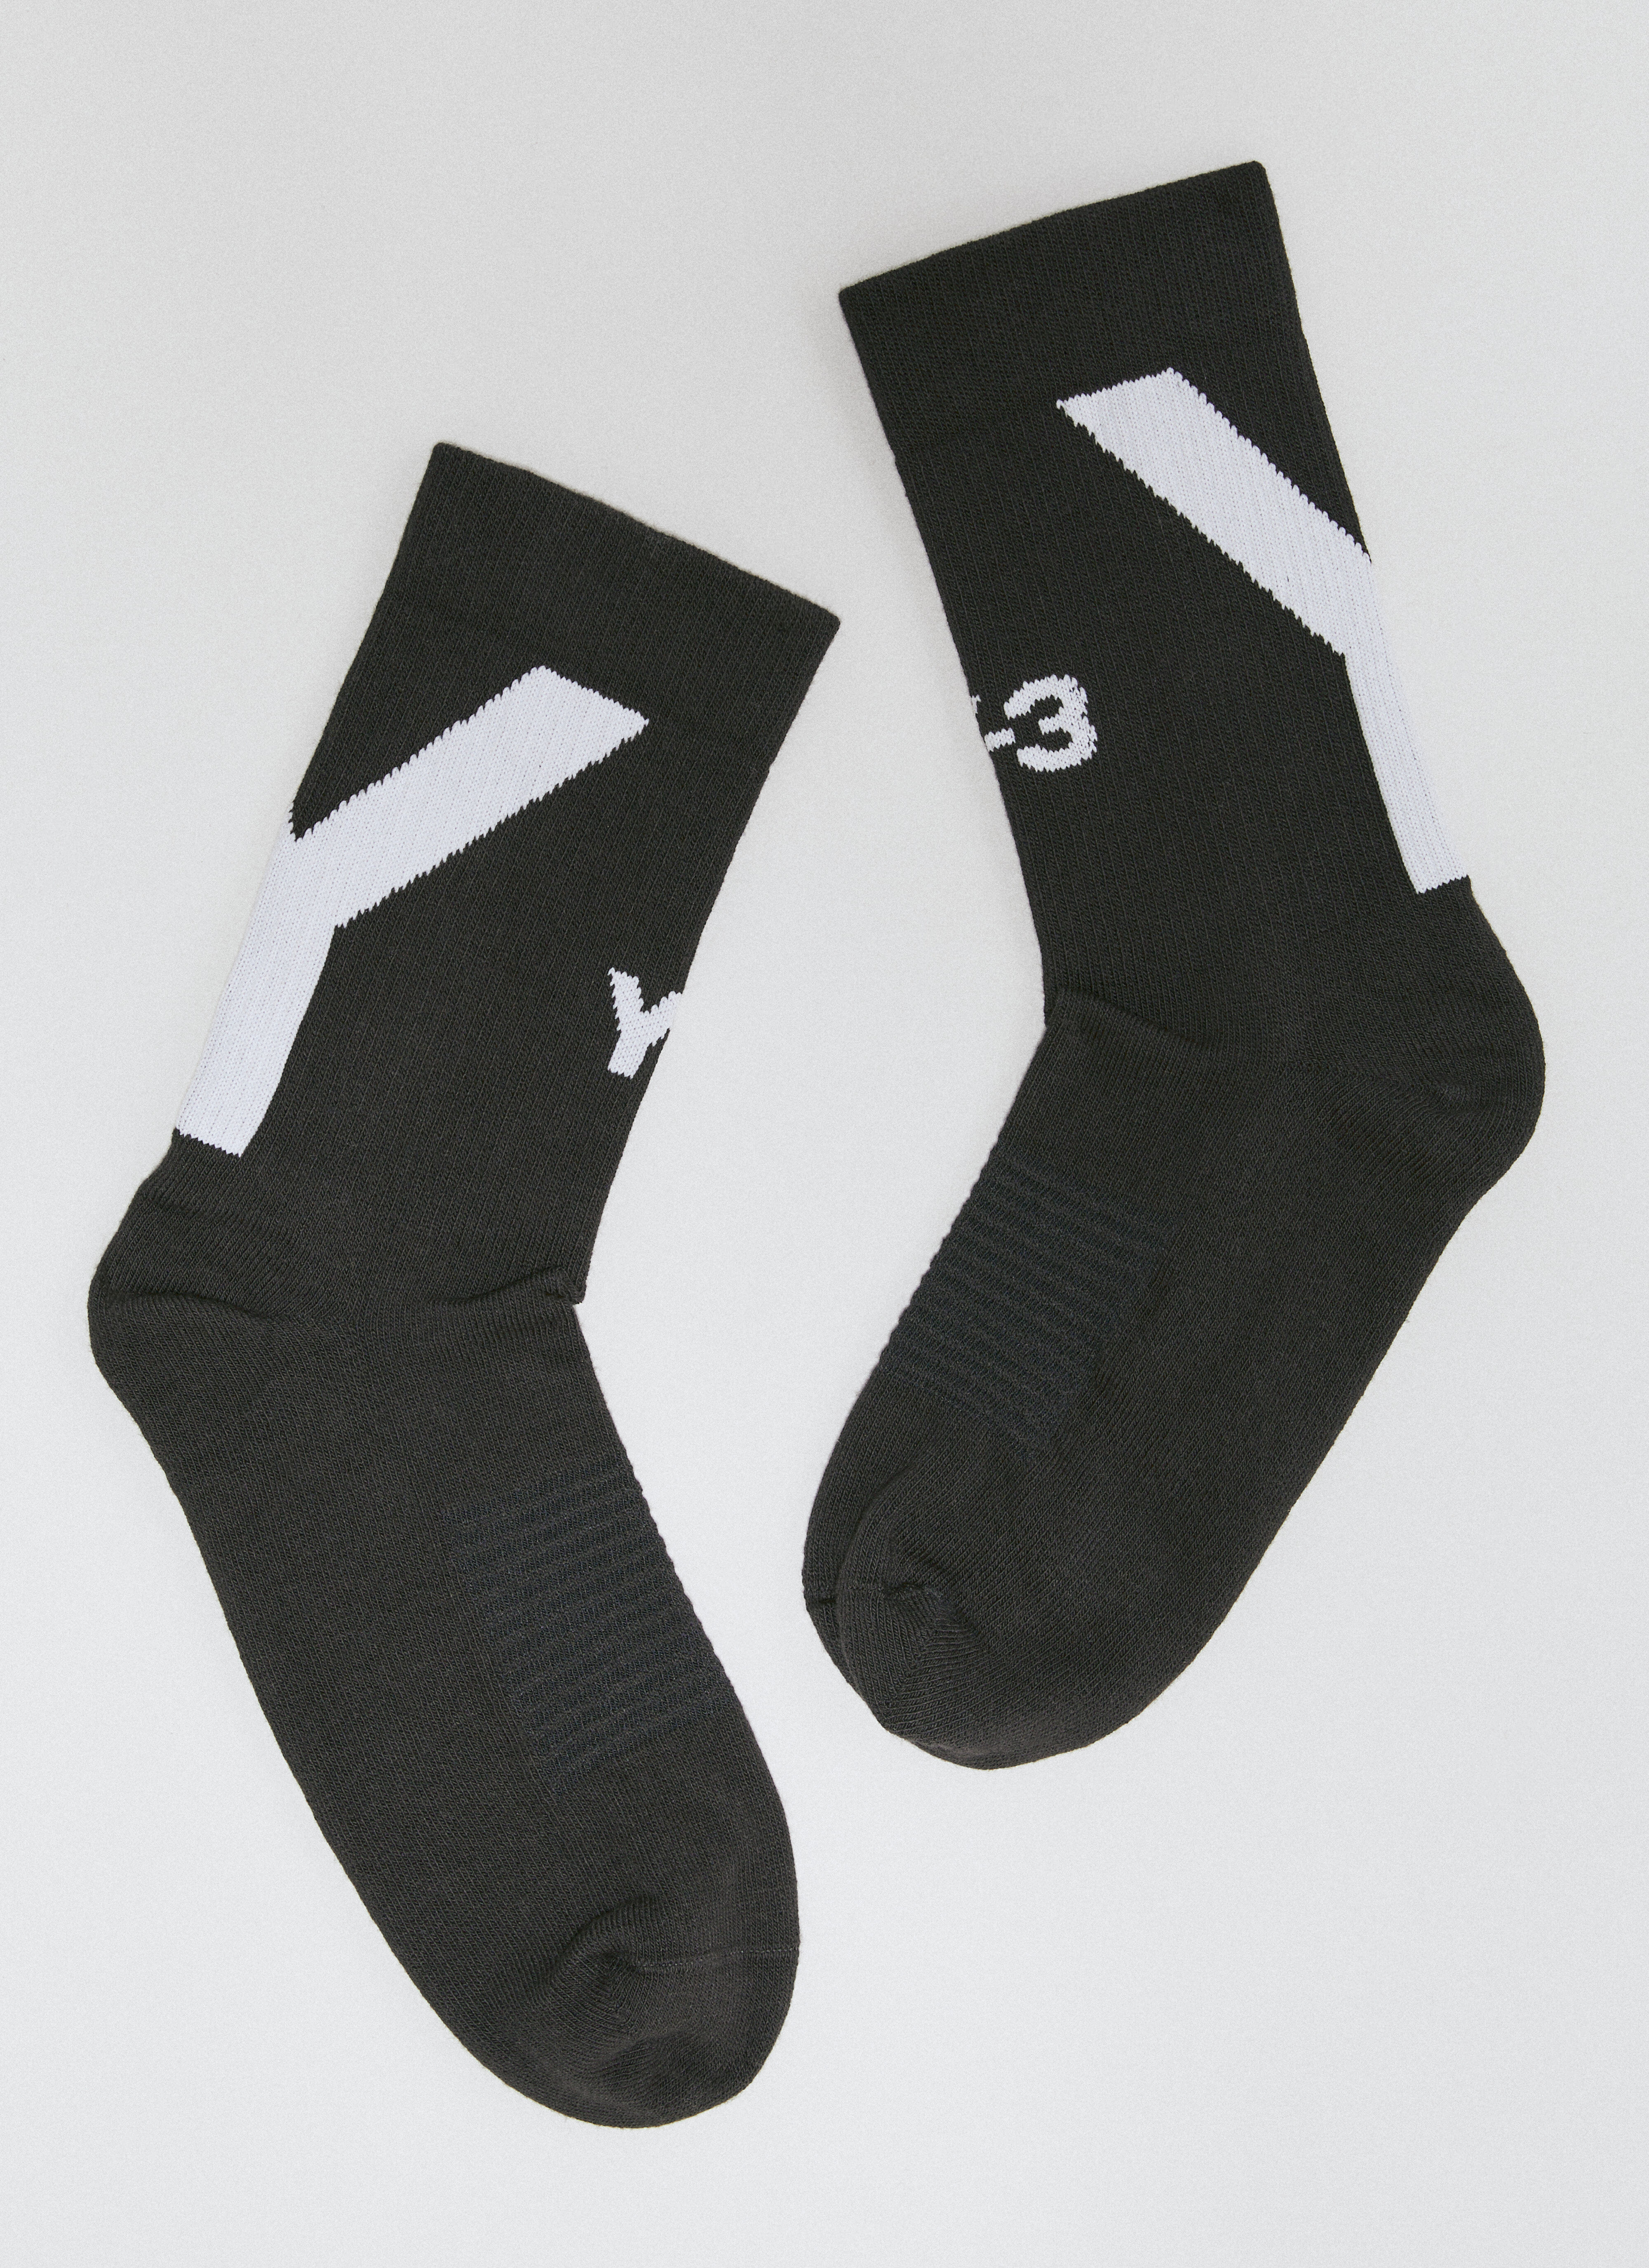 Y-3 x Real Madrid High-Top Logo Socks ブラック rma0156014